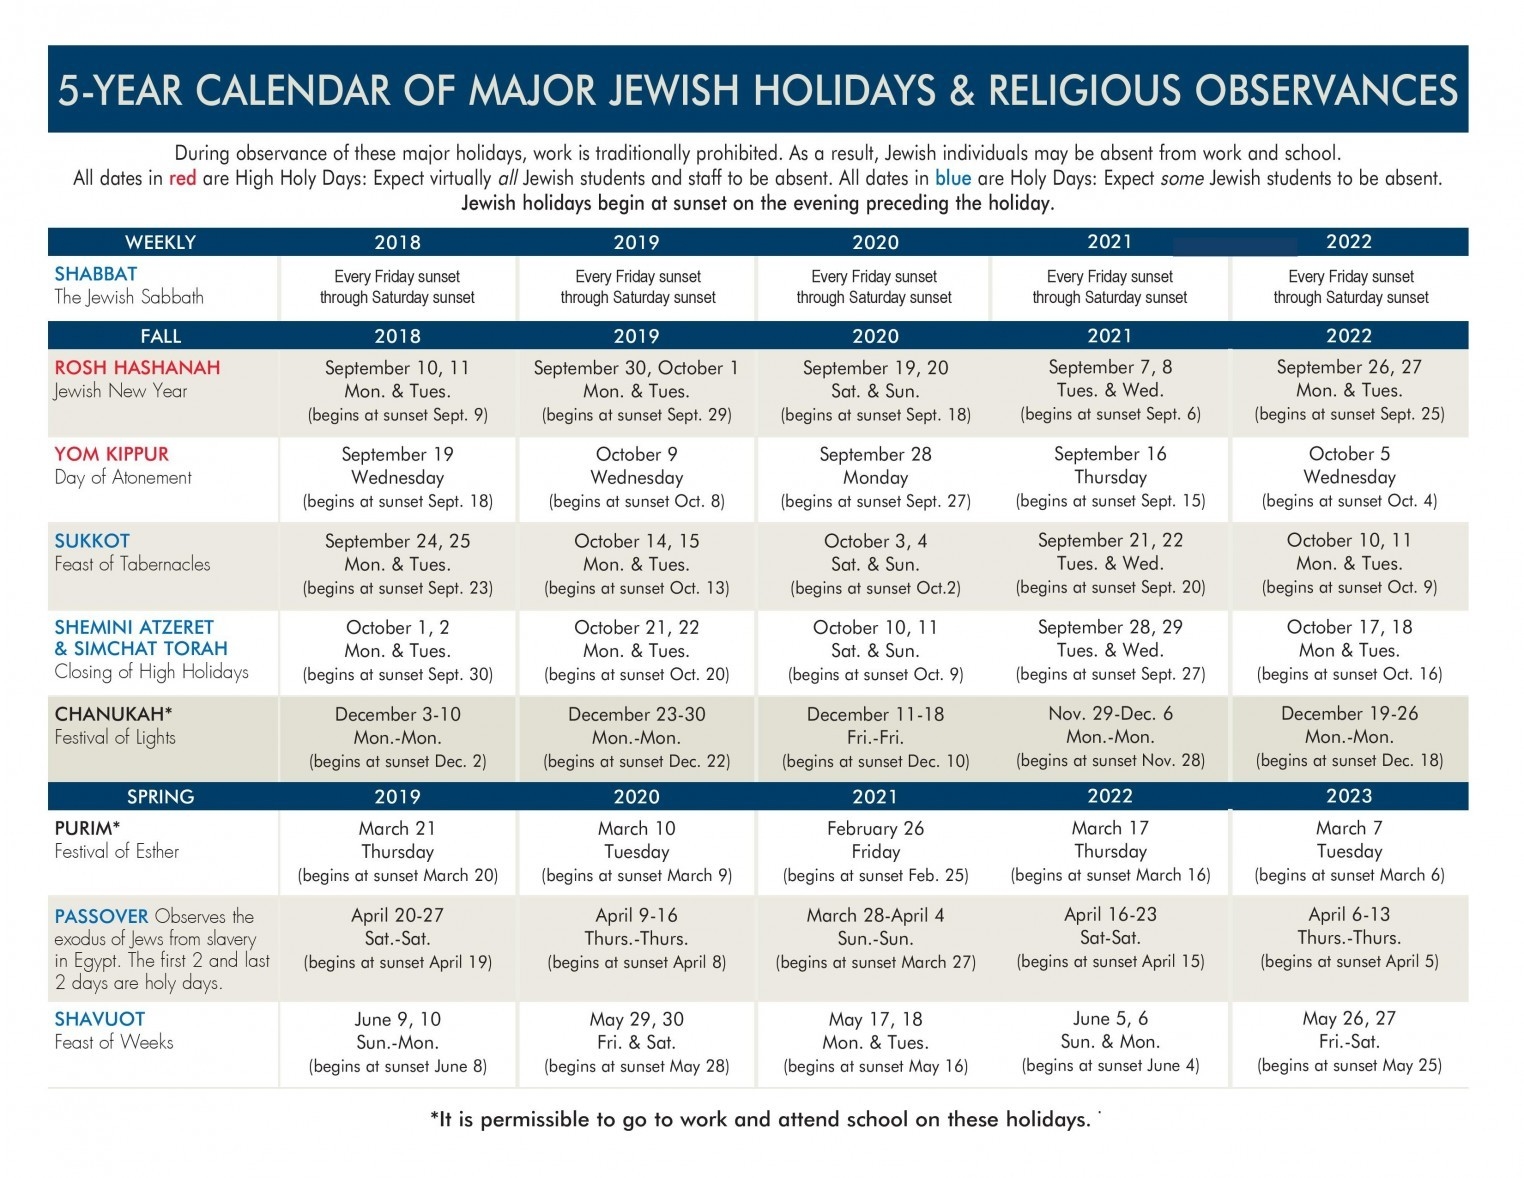 5-Year Jewish Holiday Calendar | Jewish Federation Of-Jewish Holidays In Oct